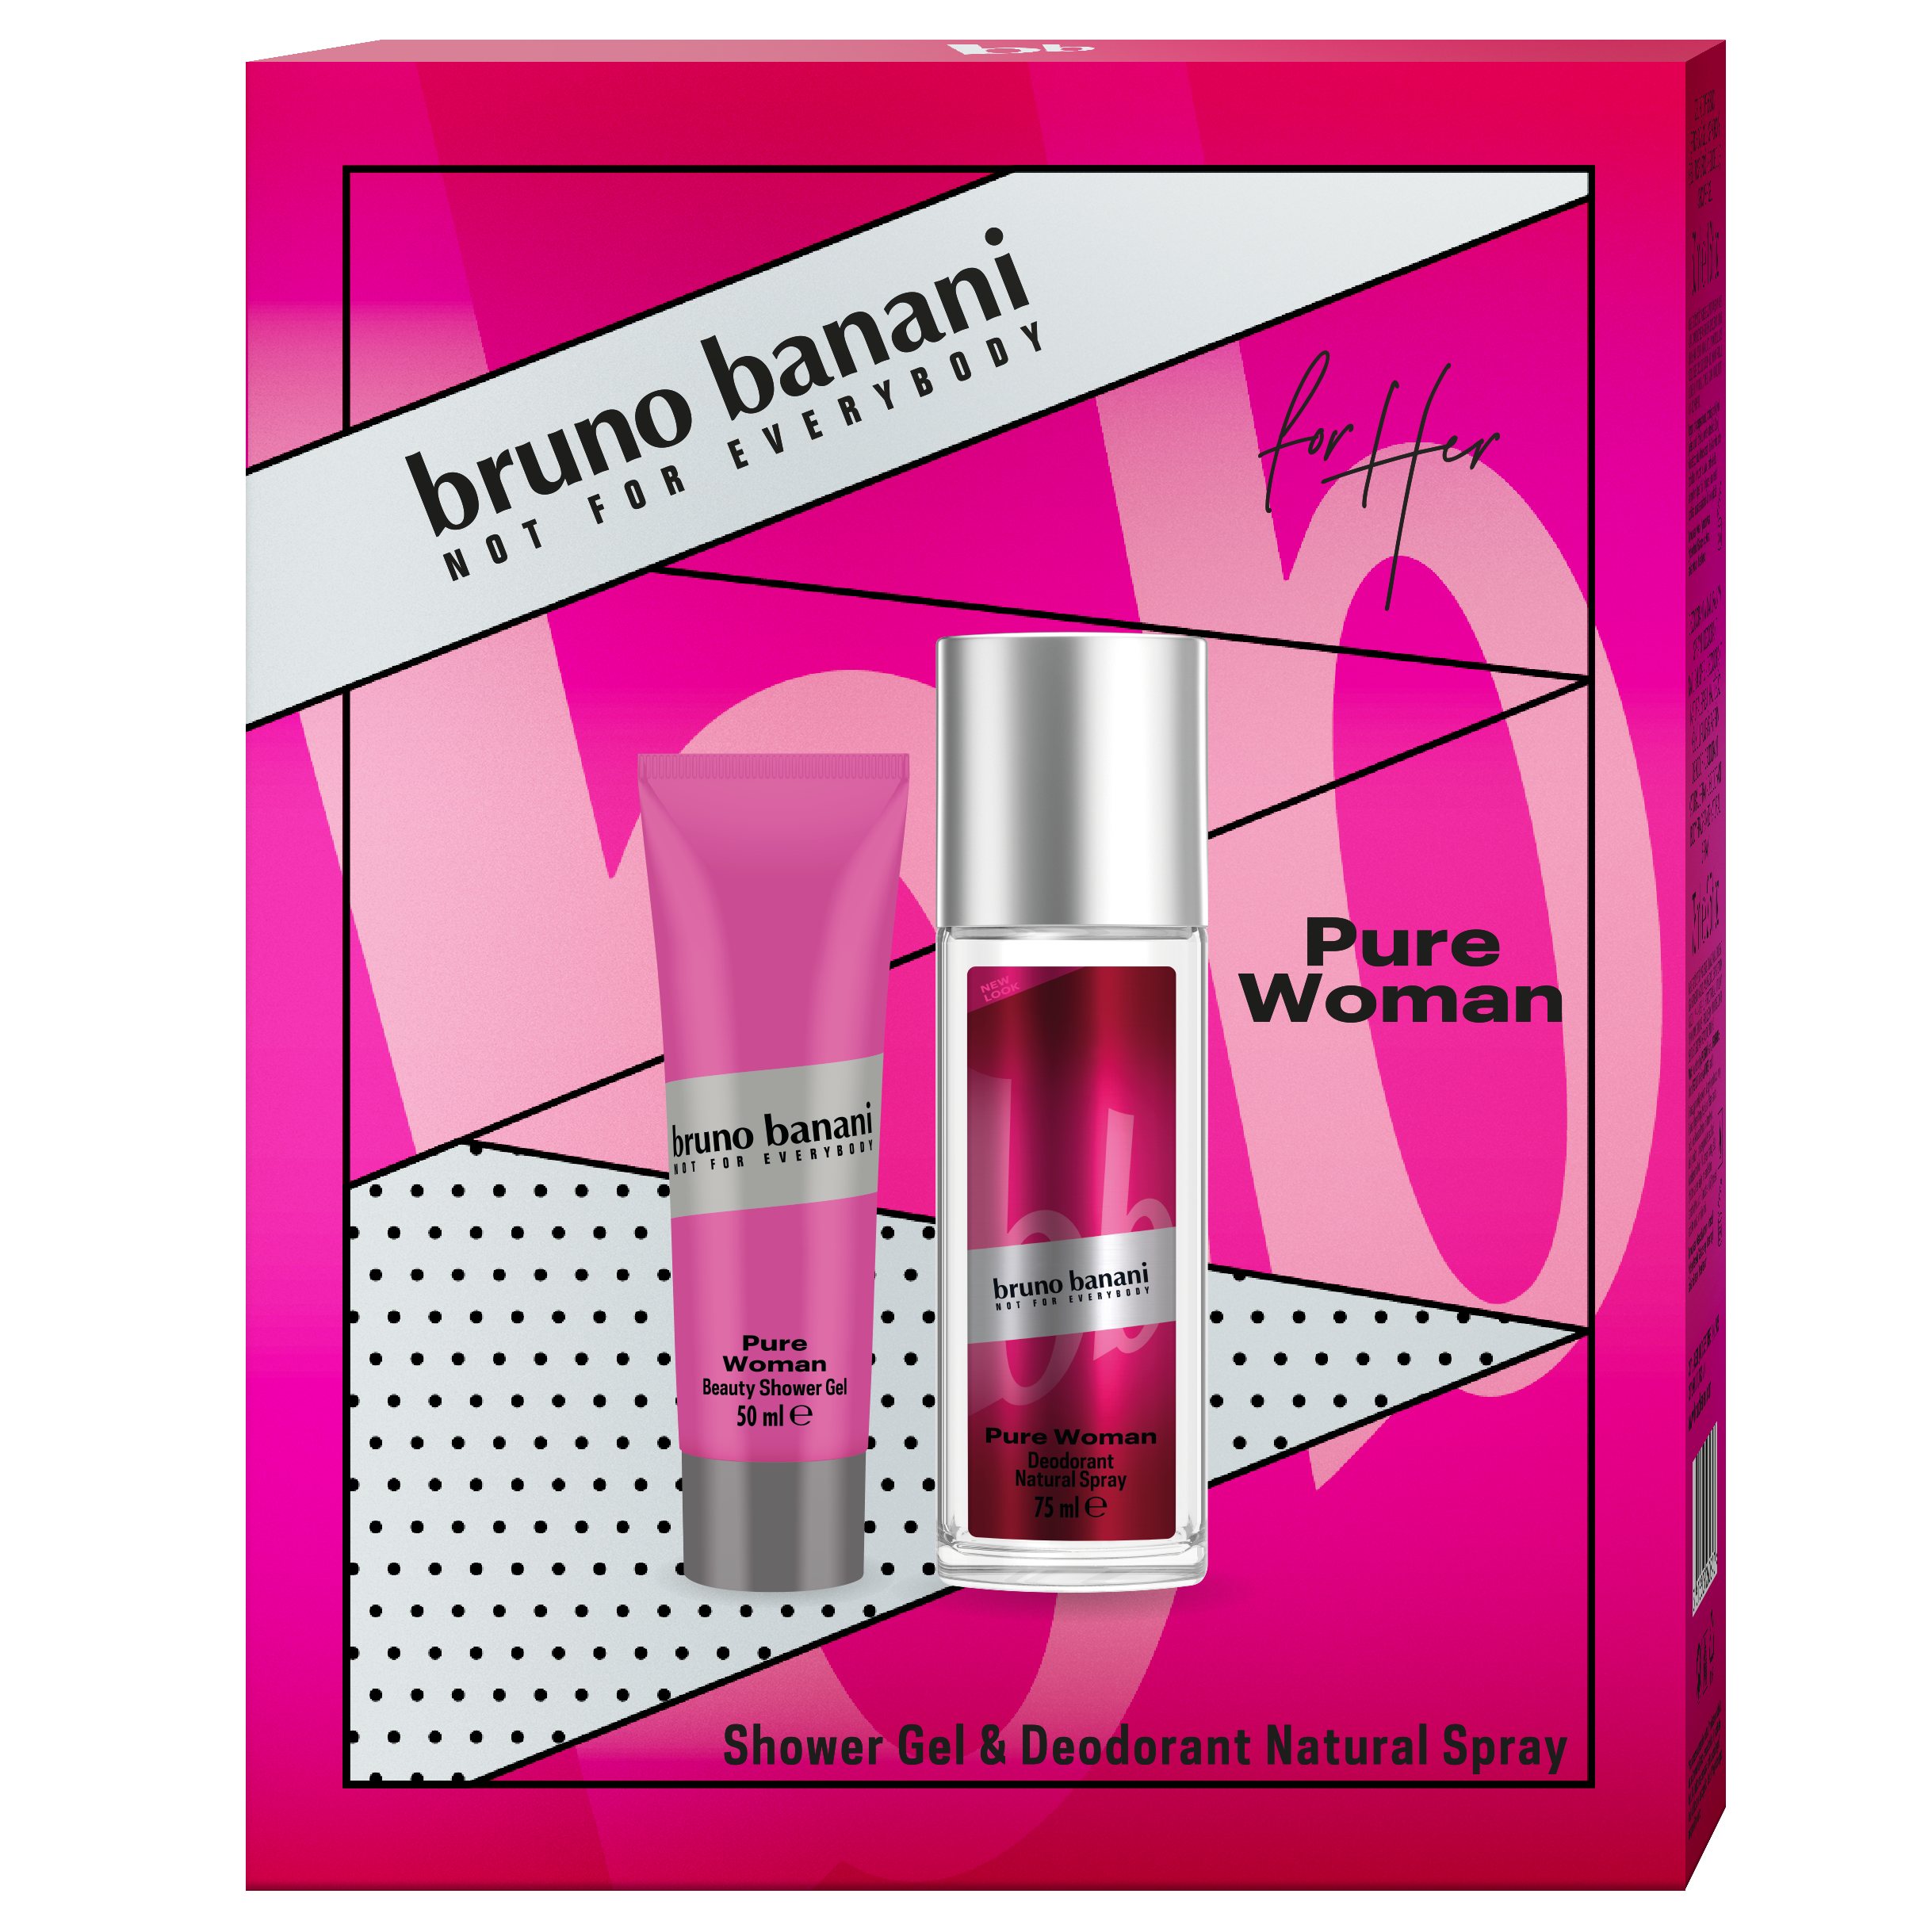 Bruno Banani natural női Woman tusfürdő 250 spray ml deodorant Pure ml+ 75